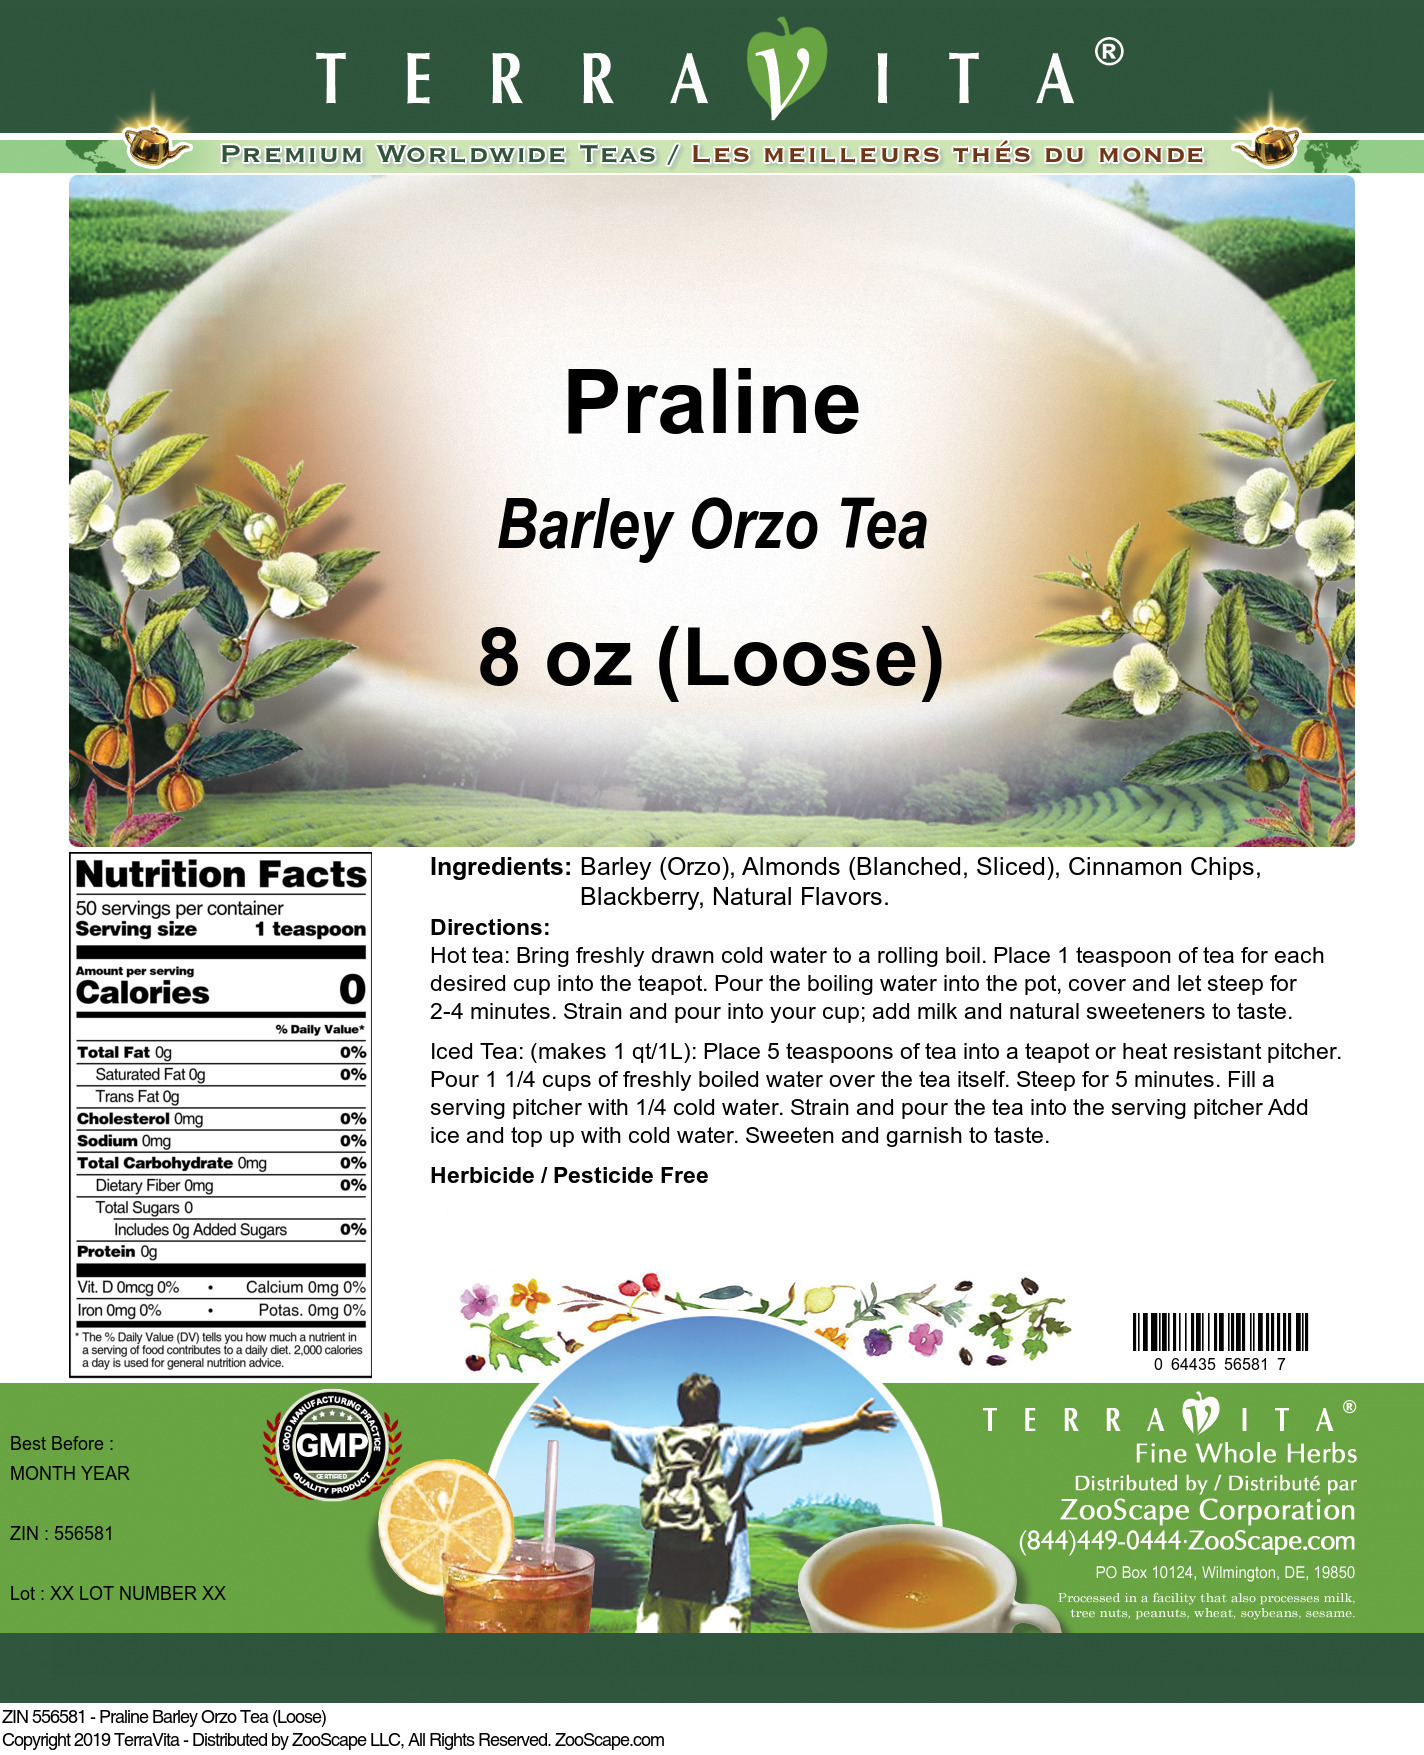 Praline Barley Orzo Tea (Loose) - Label